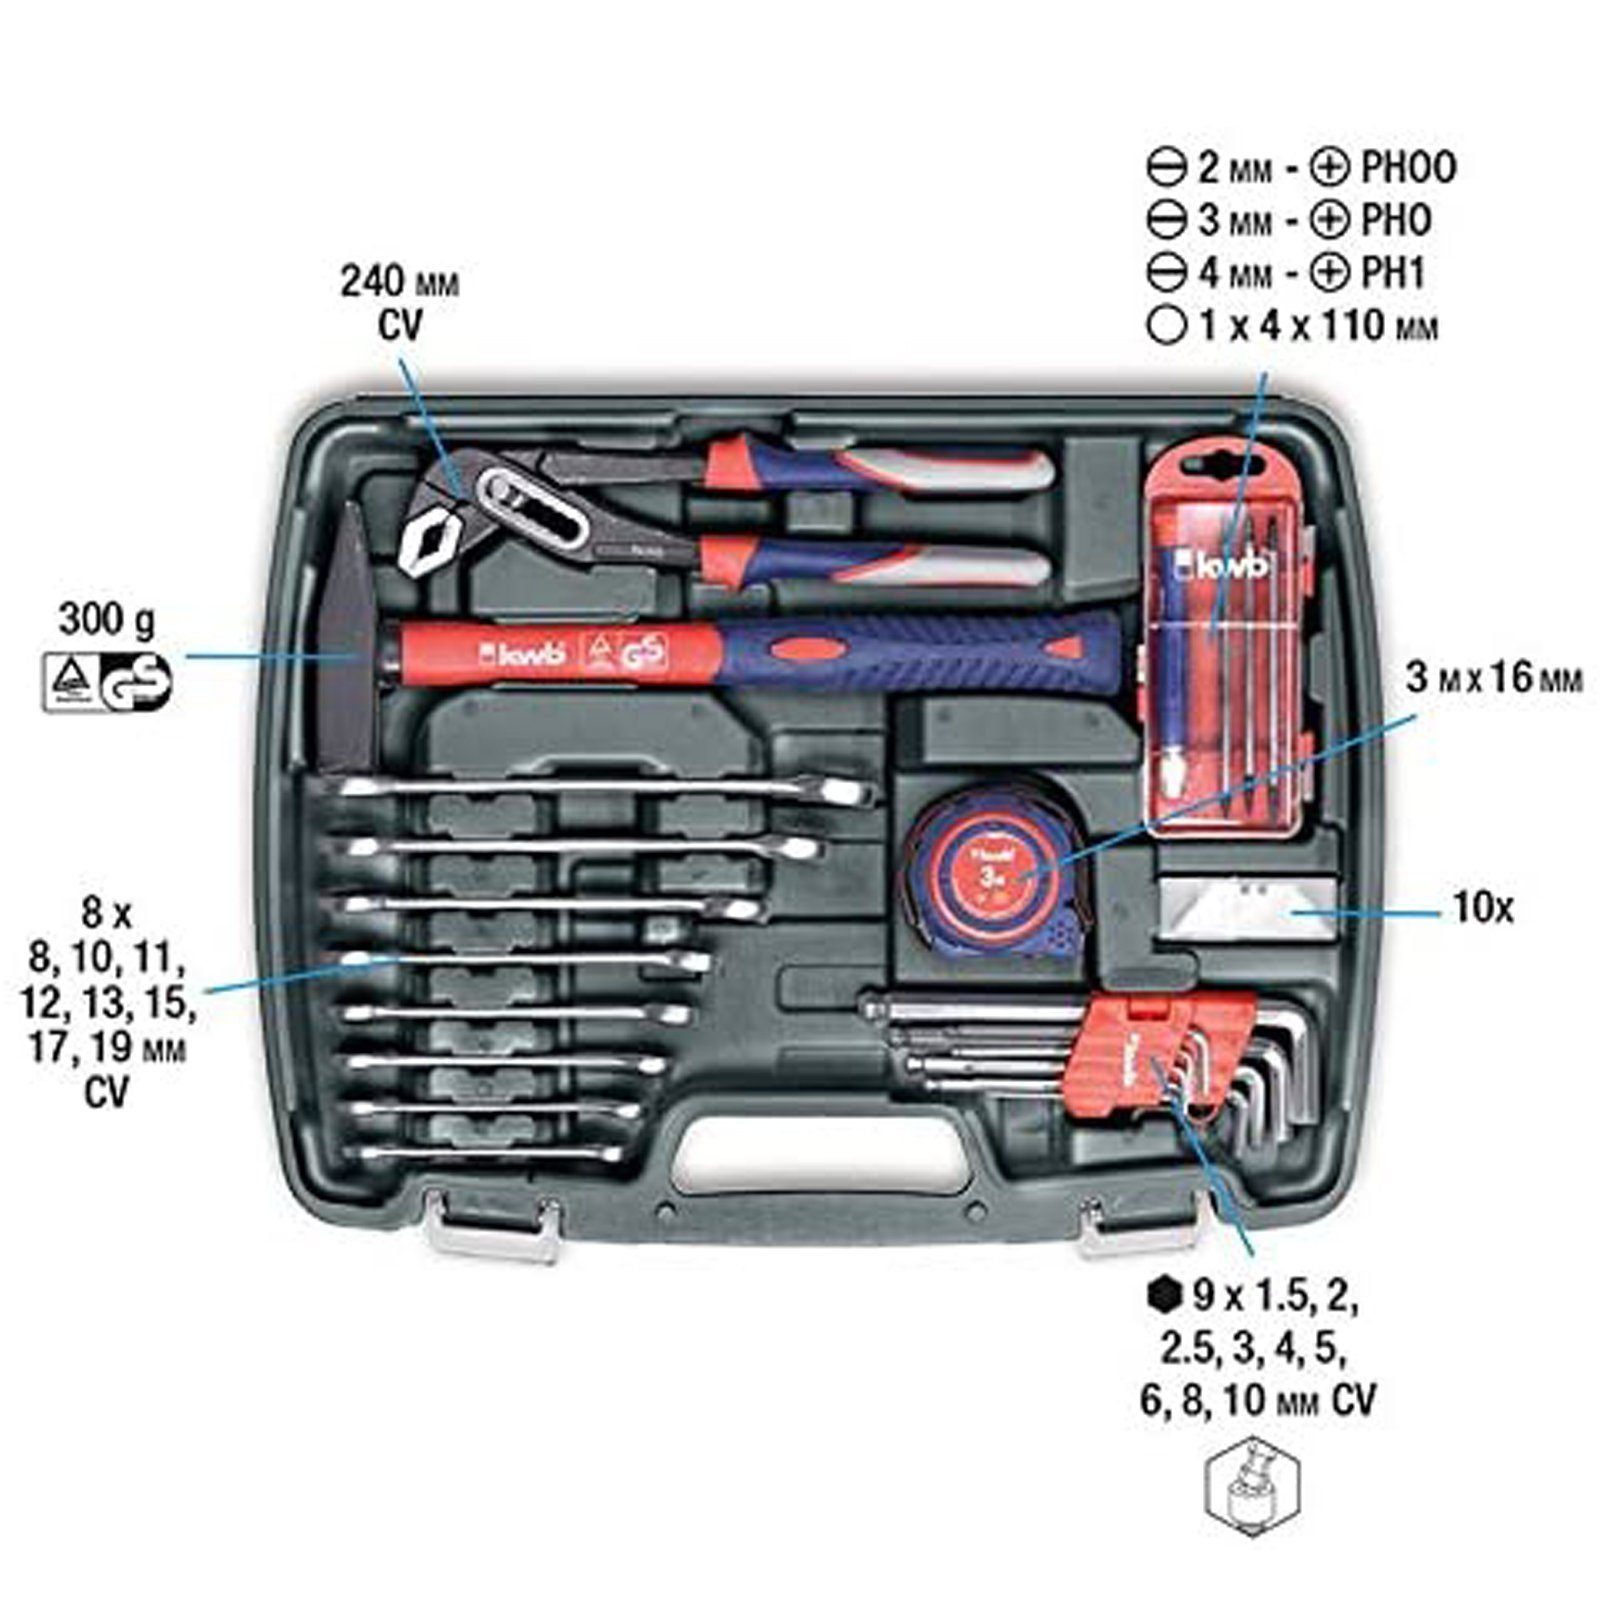 kwb gefüllt, robust, Werkzeug-Koffer kwb inkl. Werkzeug-Set, Werkzeugset 65-teilig, (Set)